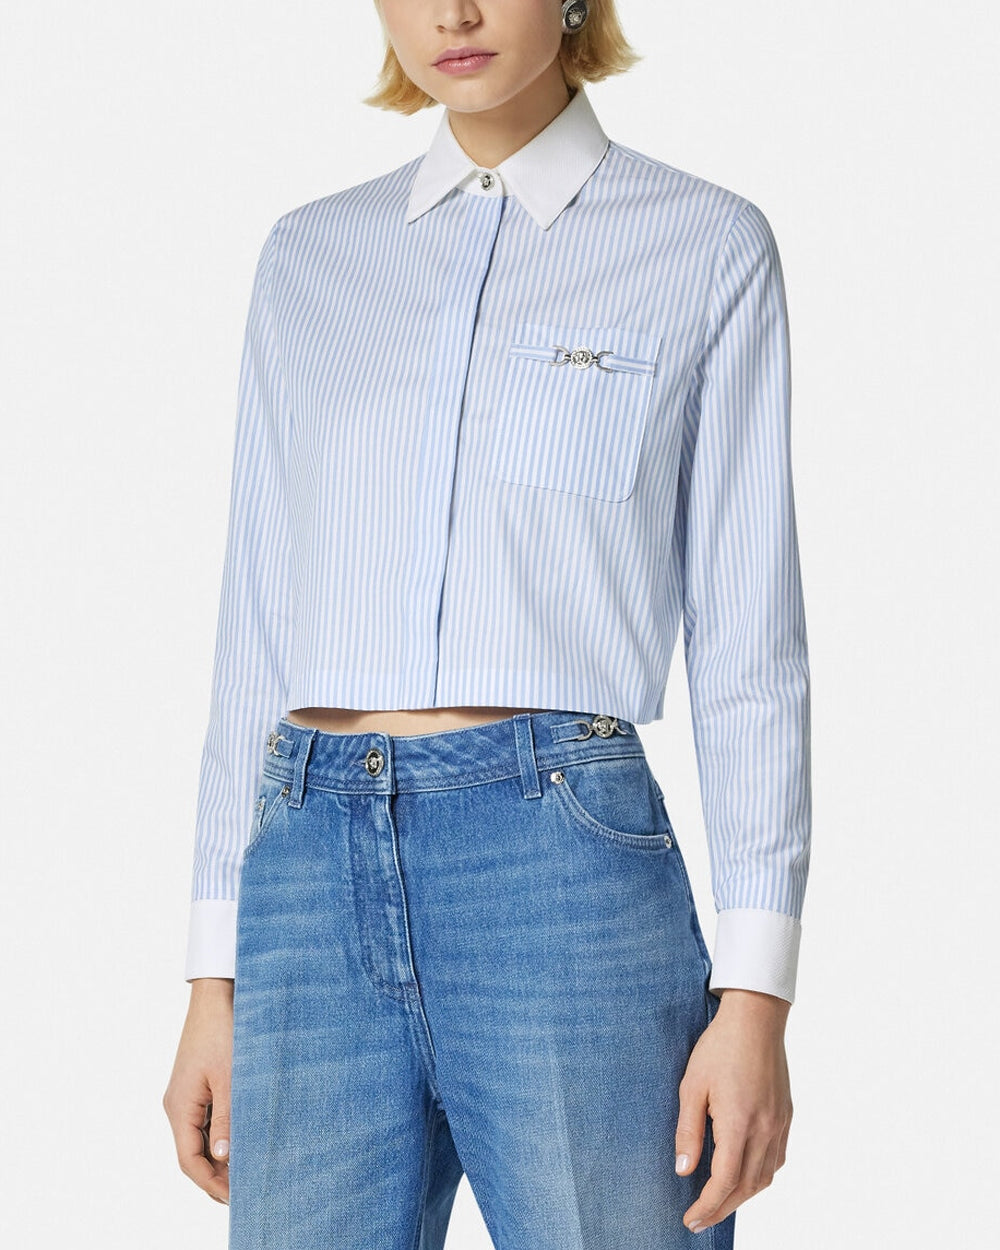 Pastel Blue and White Oxford Stripe Shirt